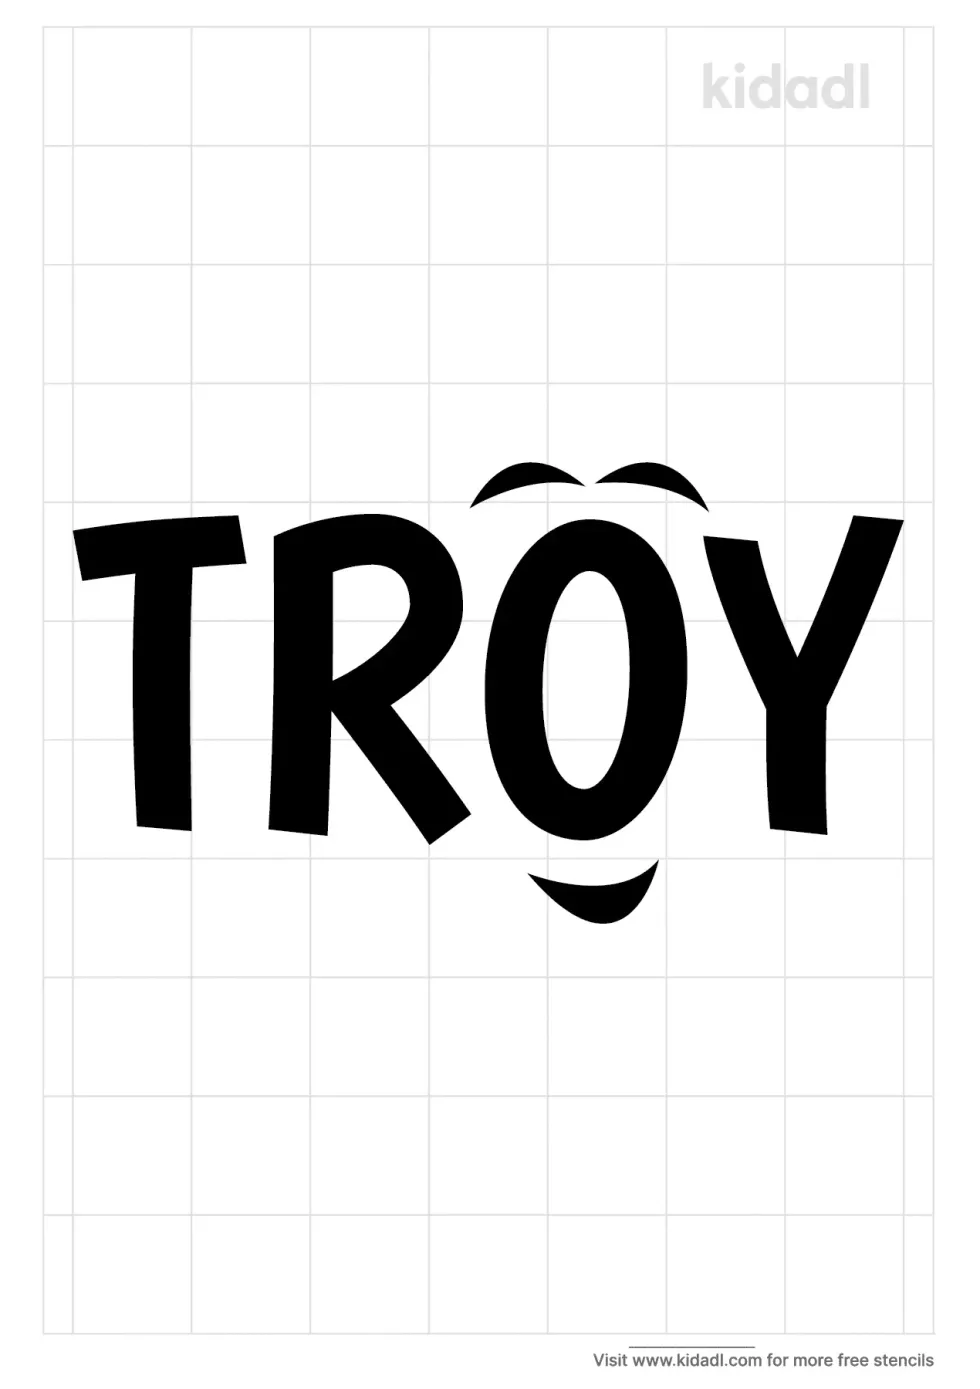 Name Troy